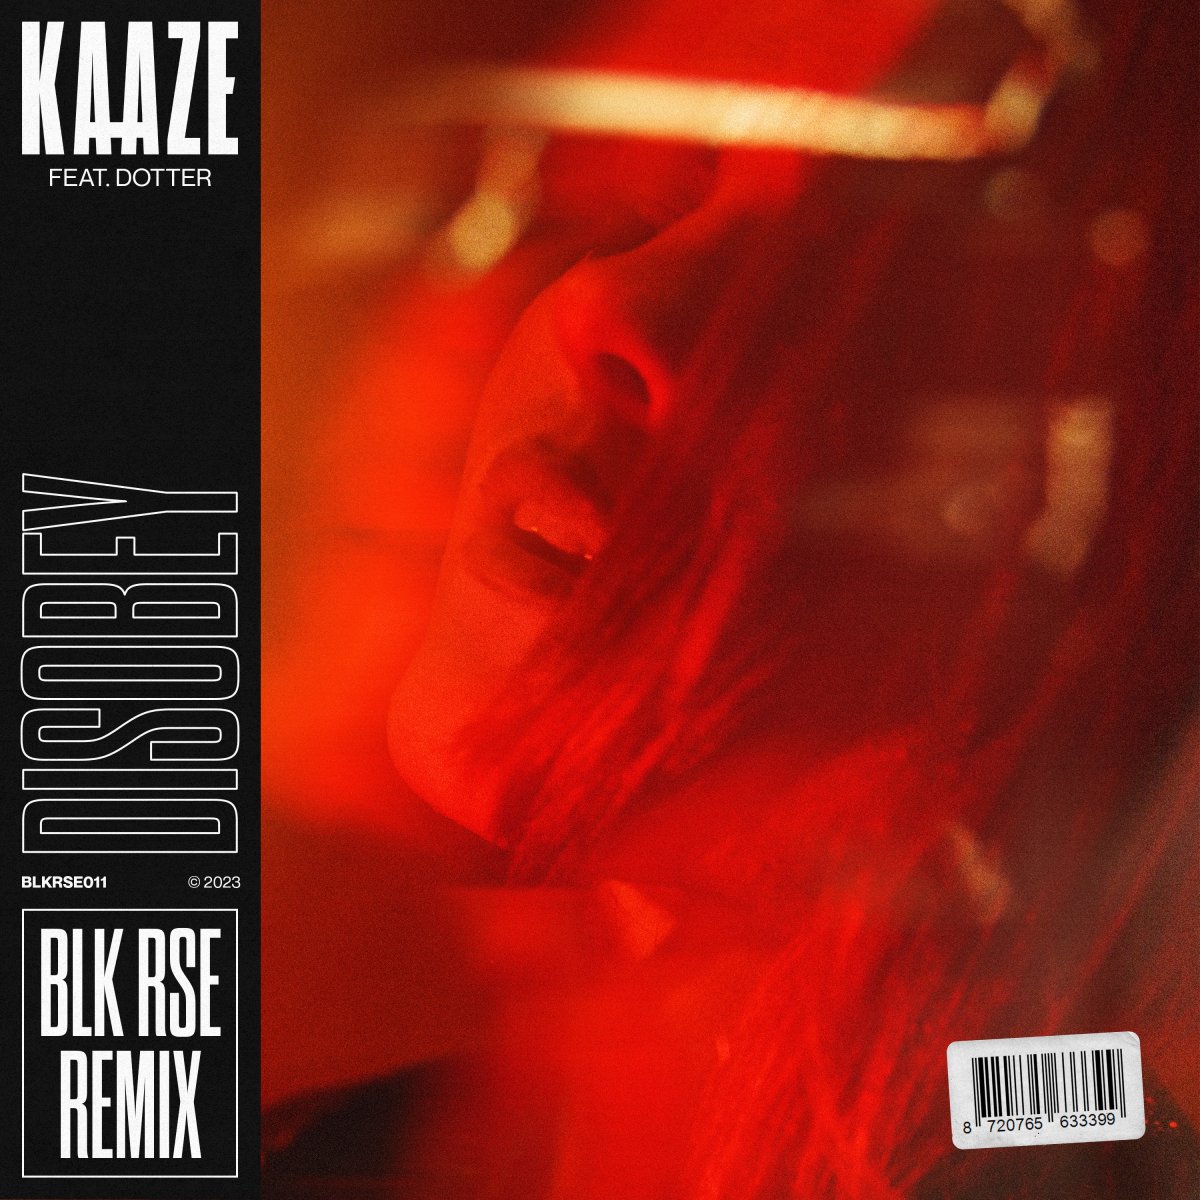 Disobey (BLK RSE Remix) - KAAZE⁠ feat. Dotter⁠